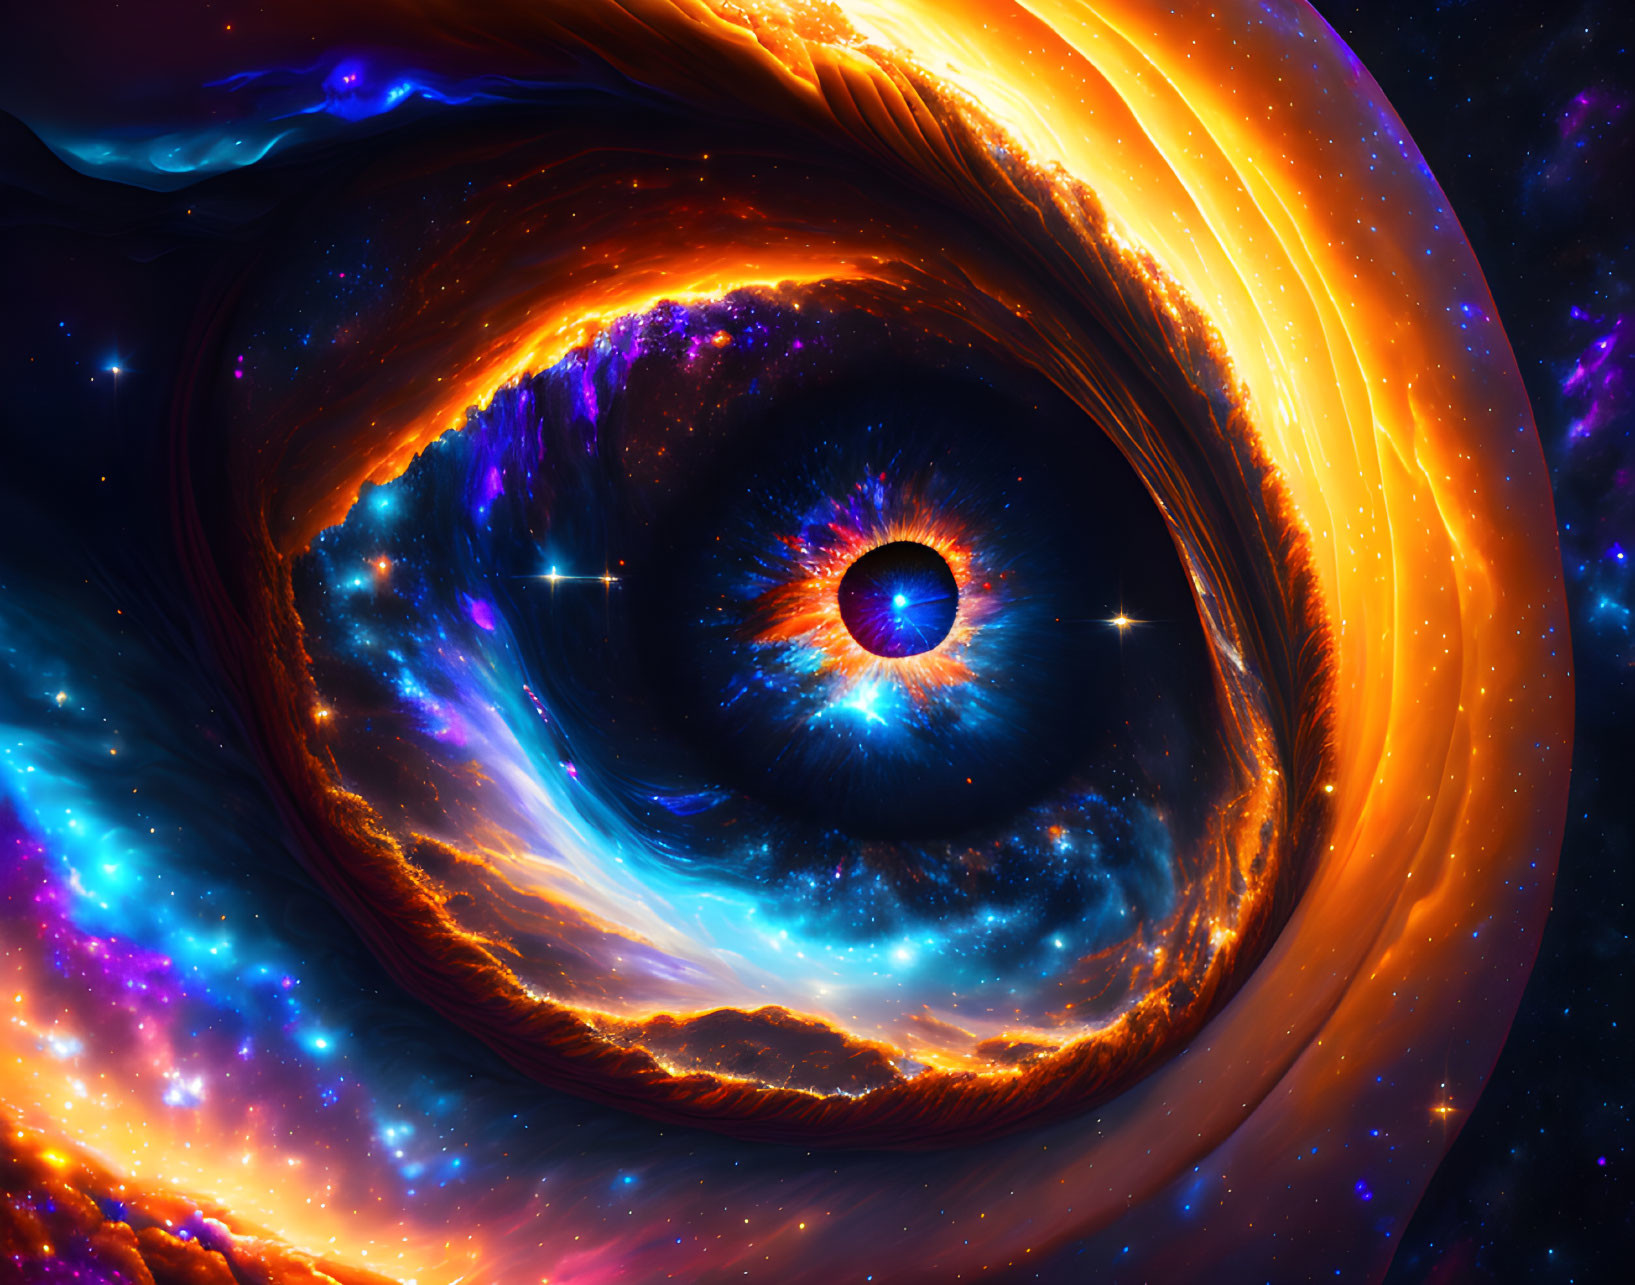 Colorful digital artwork: cosmic scene with swirling orange, blue, and purple hues around a celestial eye